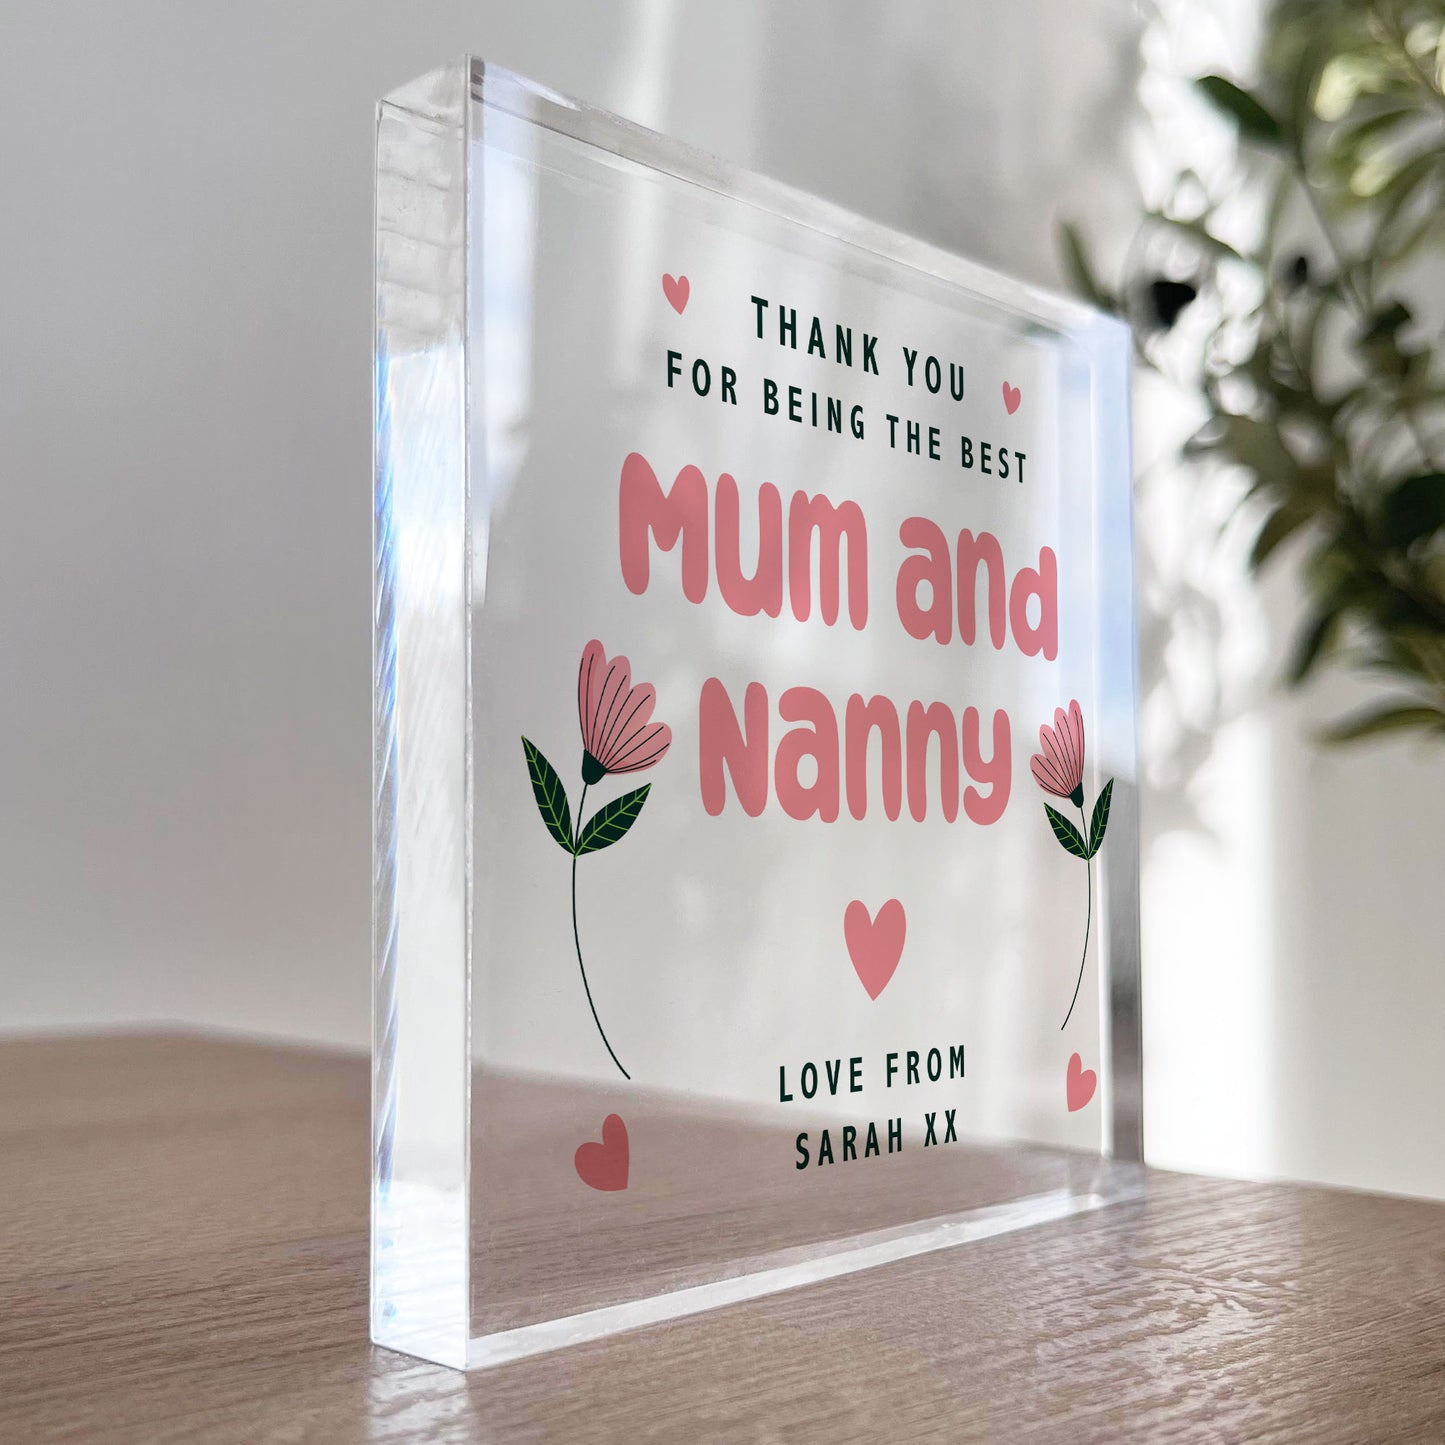 Mum and Nanny Gift Acrylic Block Thank You Birthday Gift For Mum